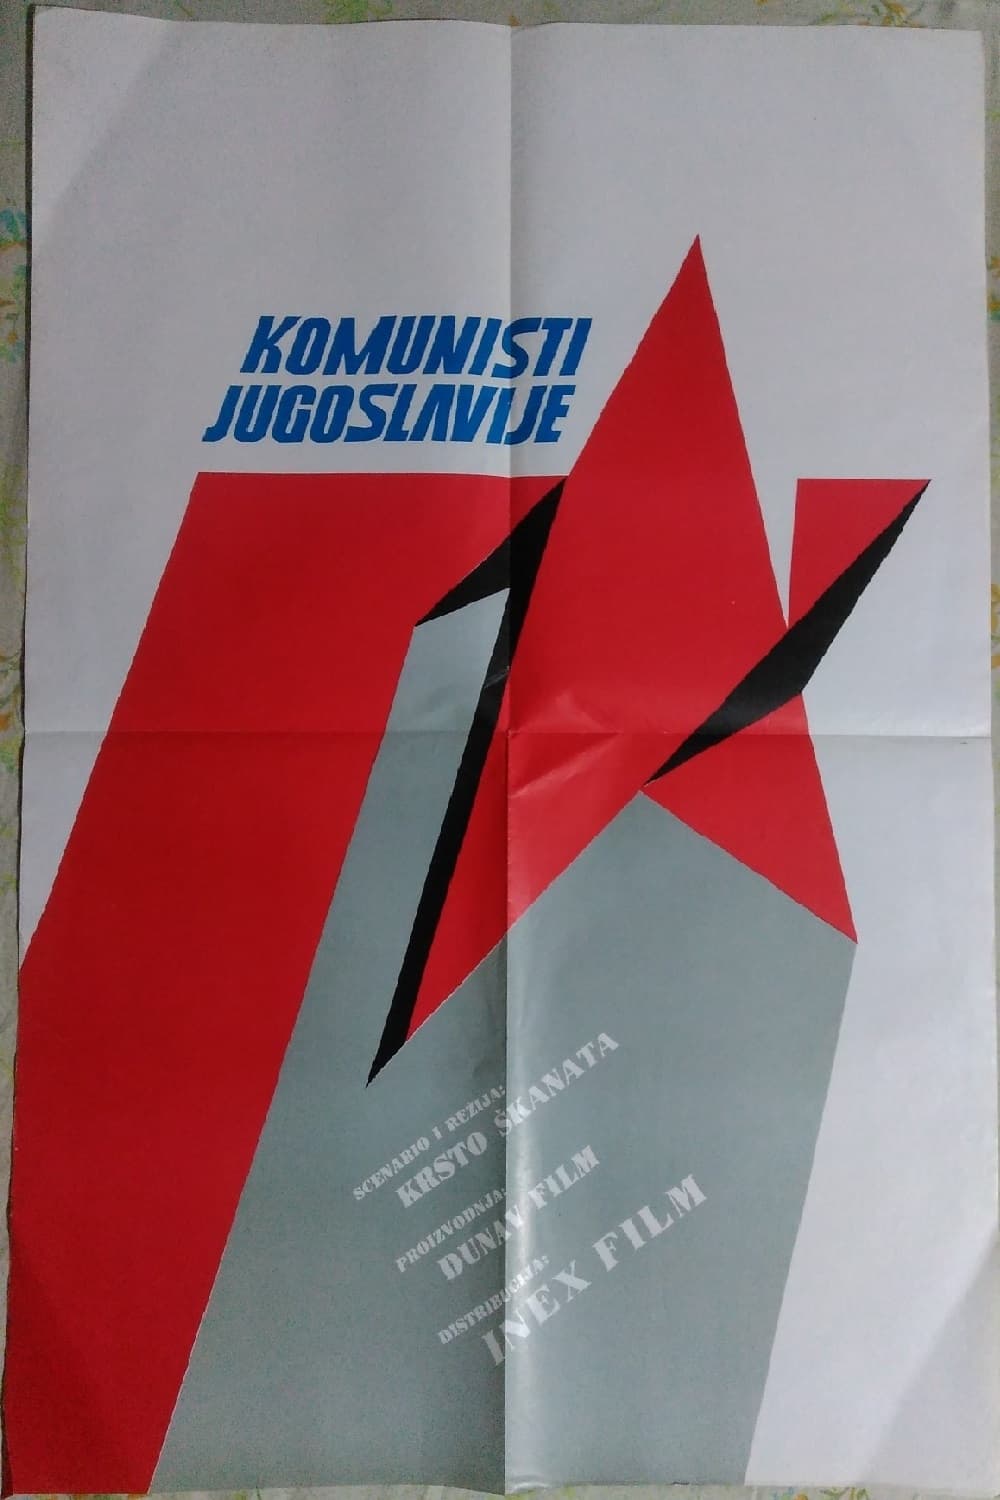 Communists of Yugoslavia